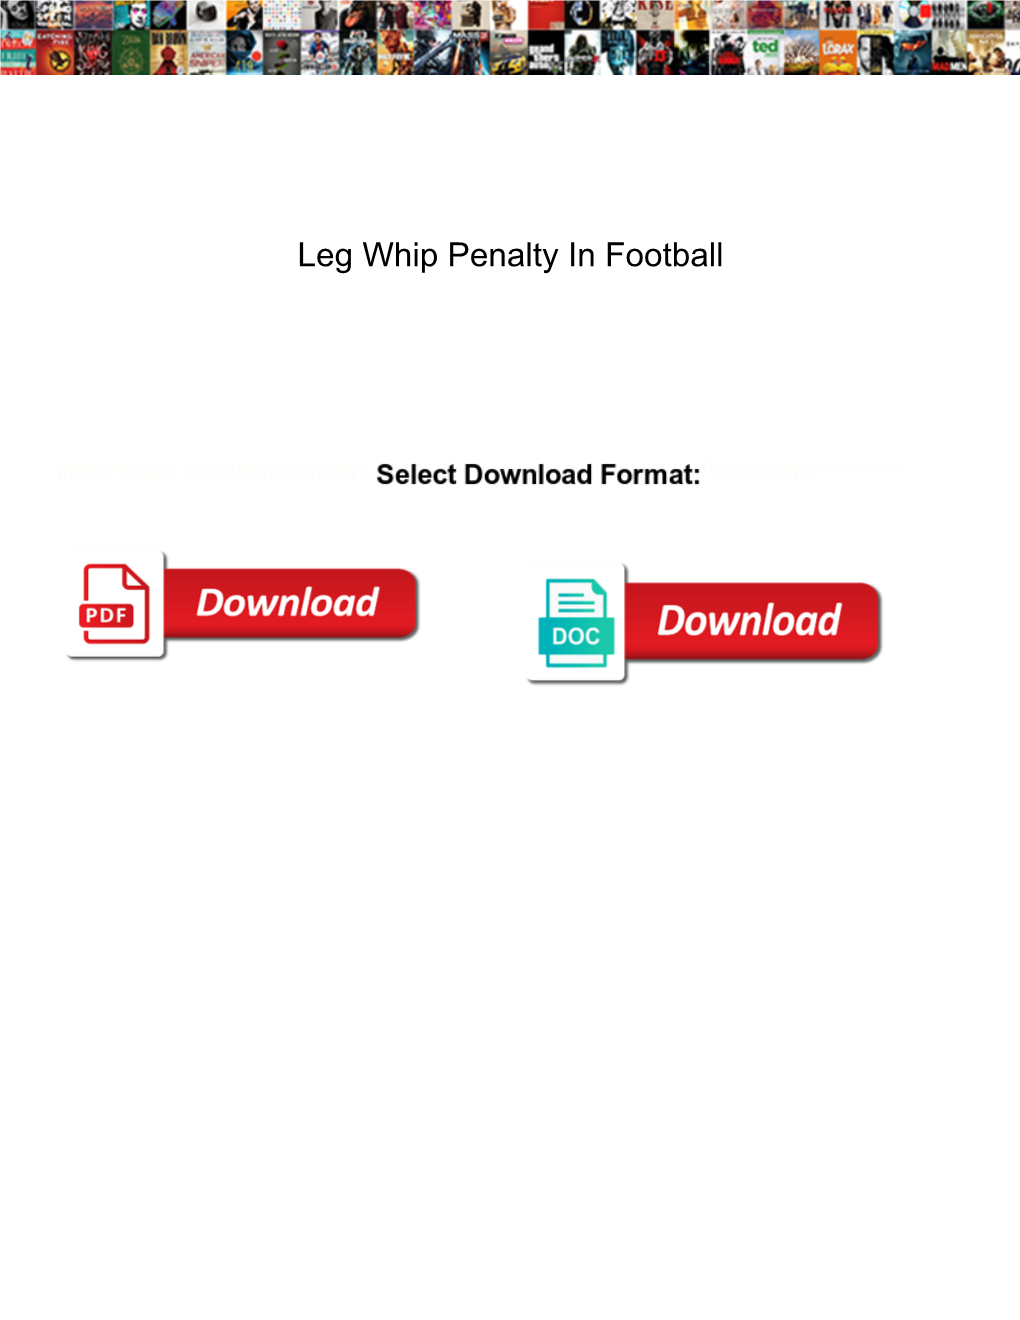 Leg Whip Penalty in Football